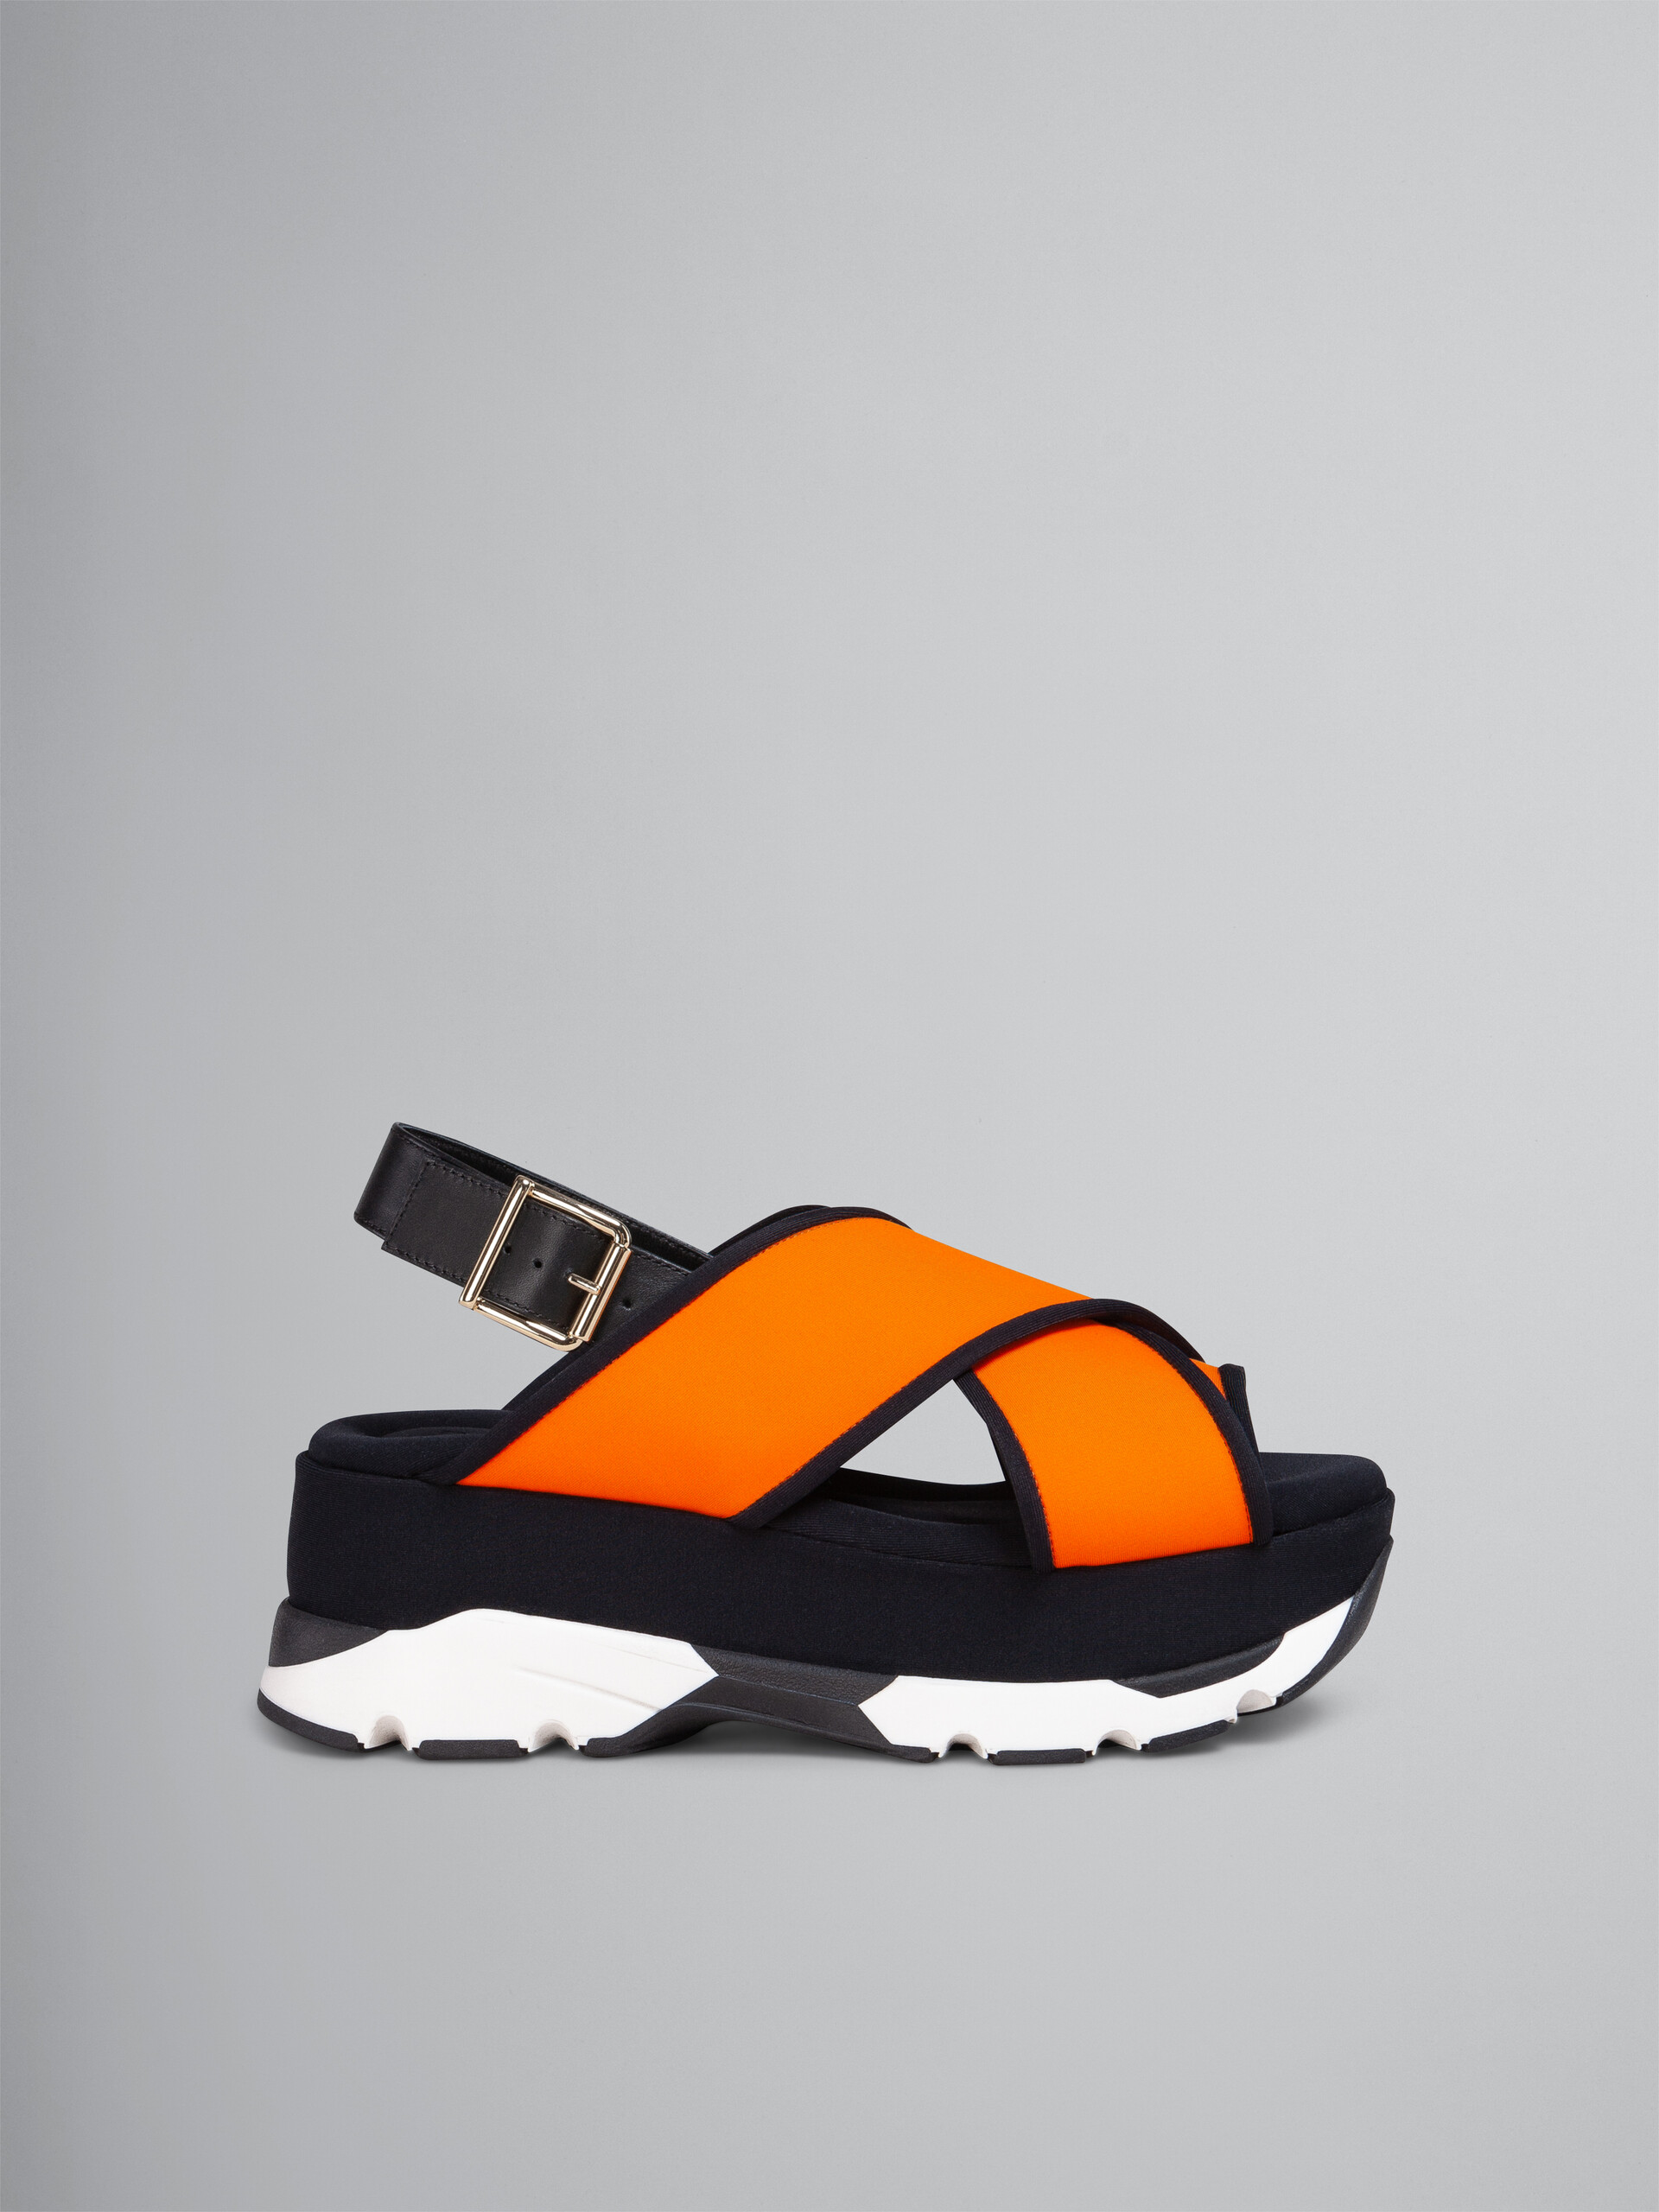 Sandalo zeppa in tessuto tecnico arancio - Sandali - Image 1